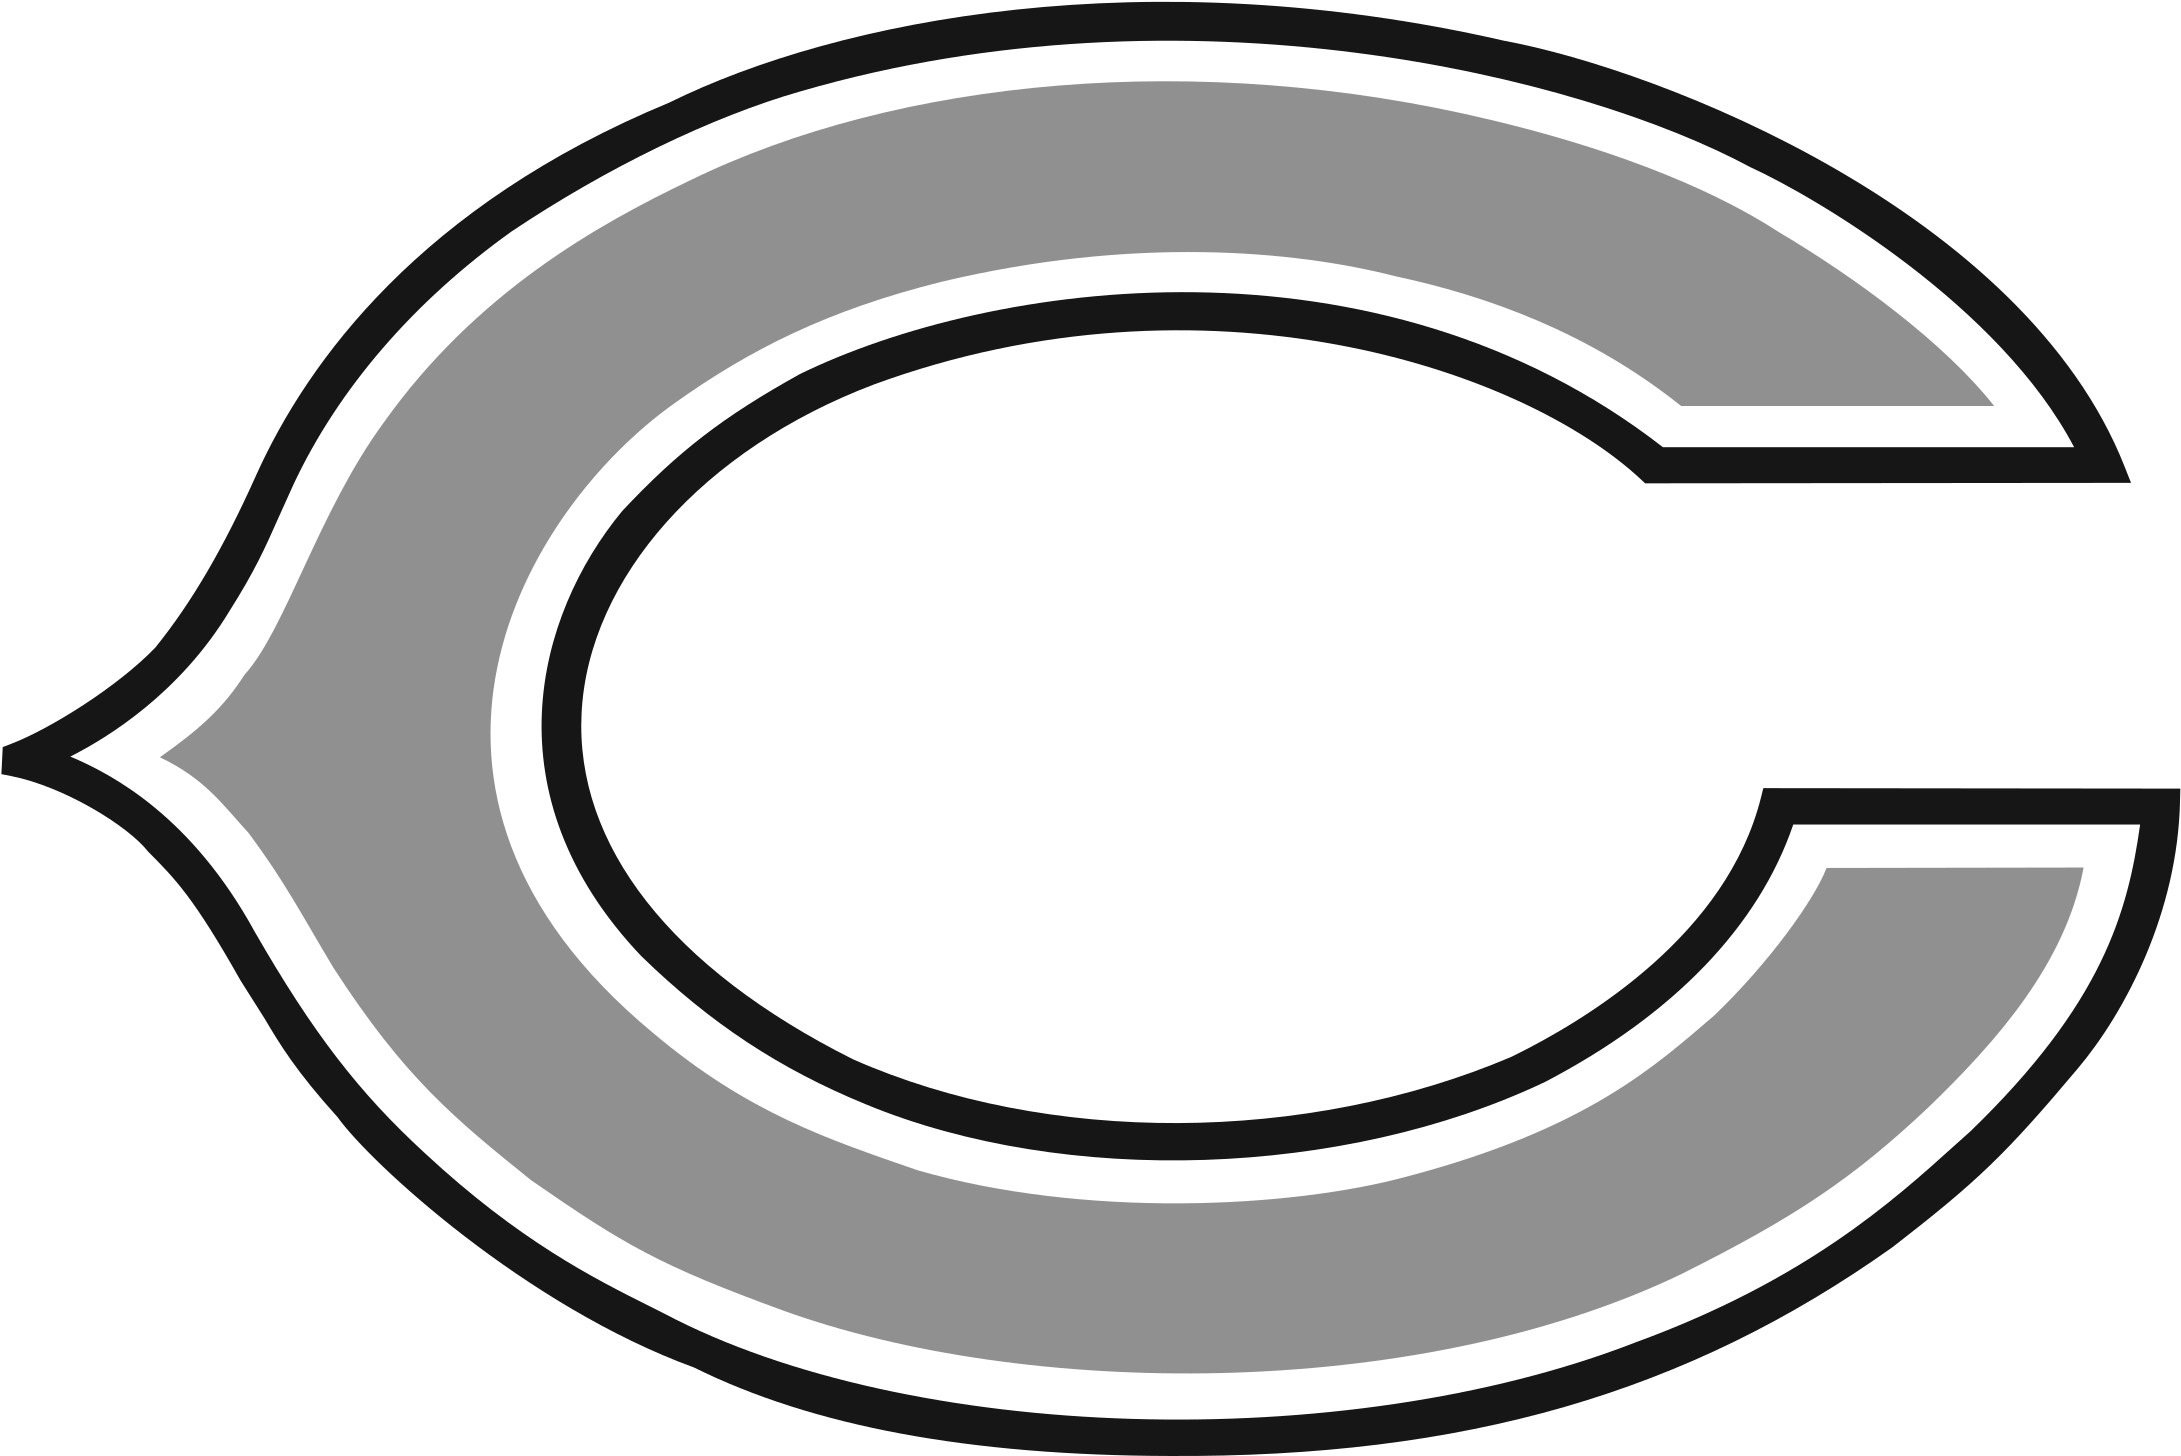 Chicago Bears Logo Black And White - Chicago Bears Logo Black And White (2400x1600)